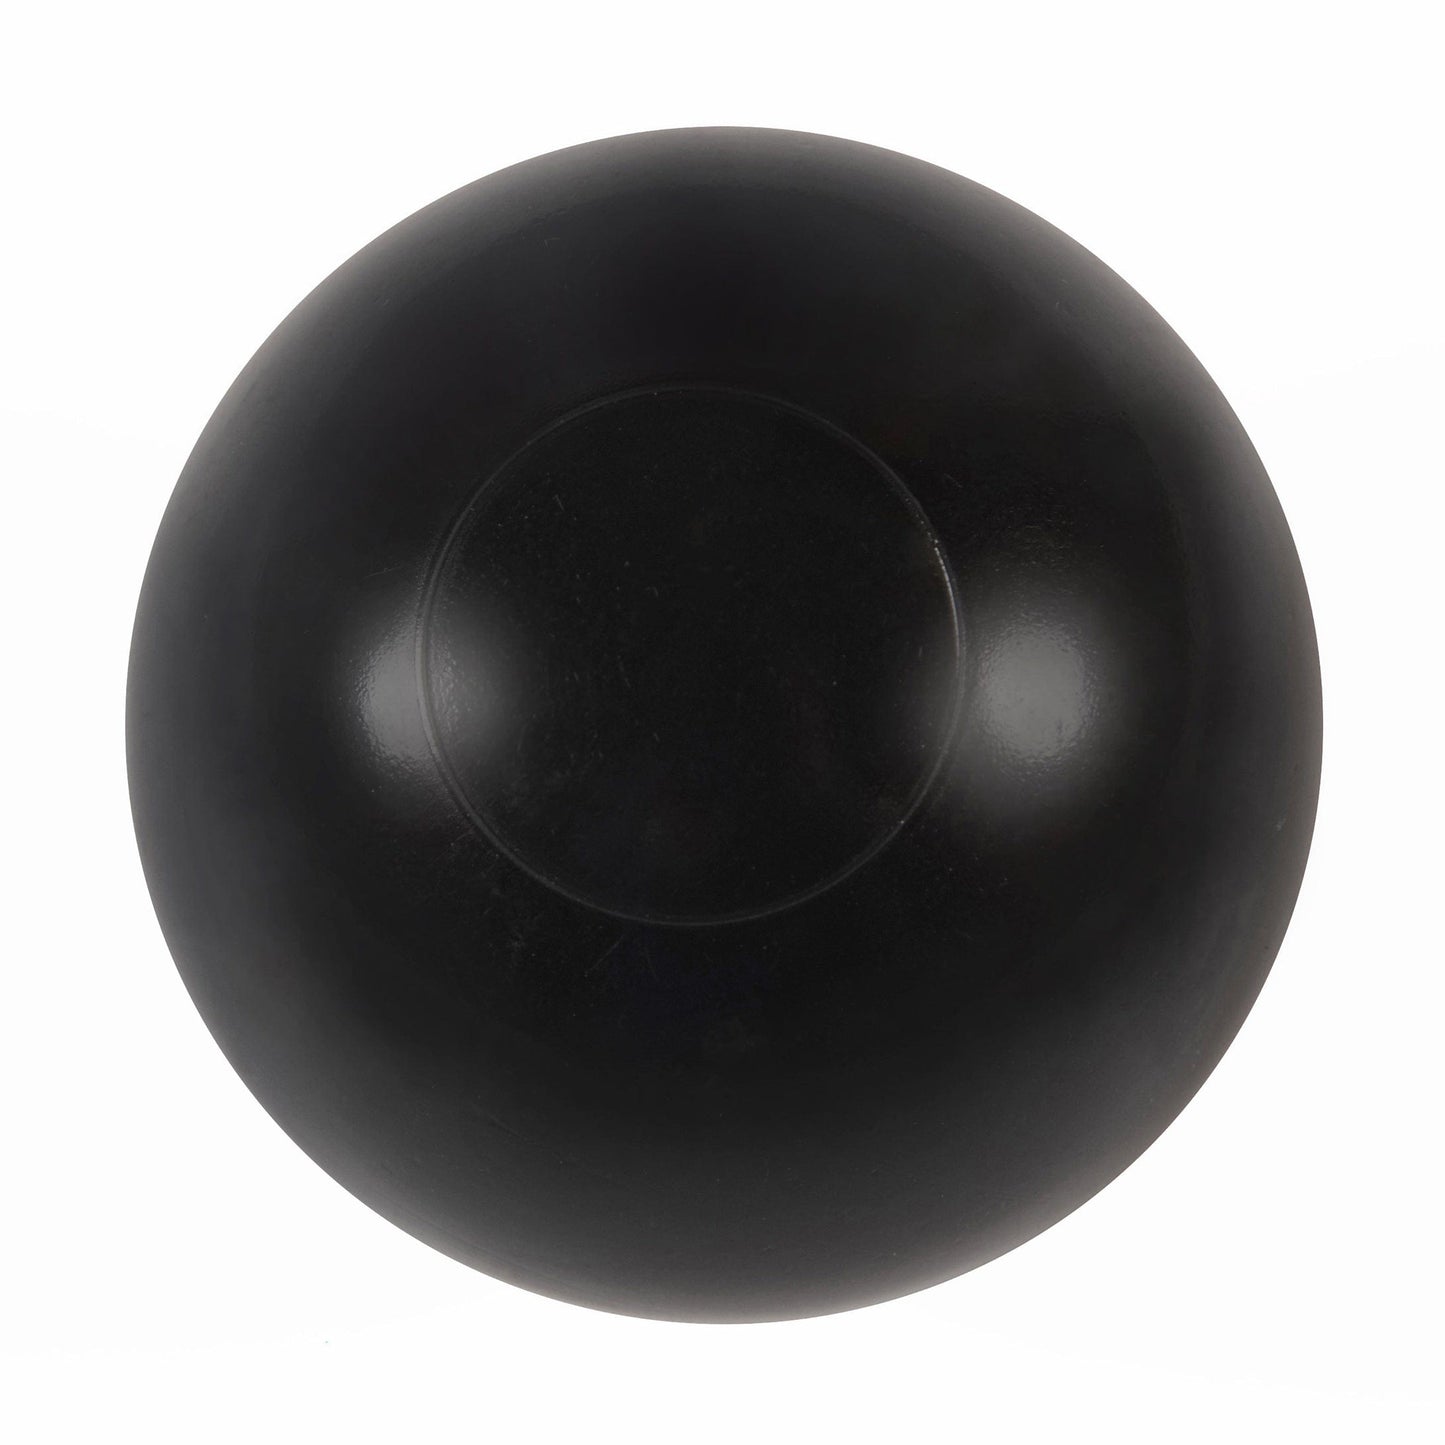 Premium Black Square Ball Pit + 400 Balls